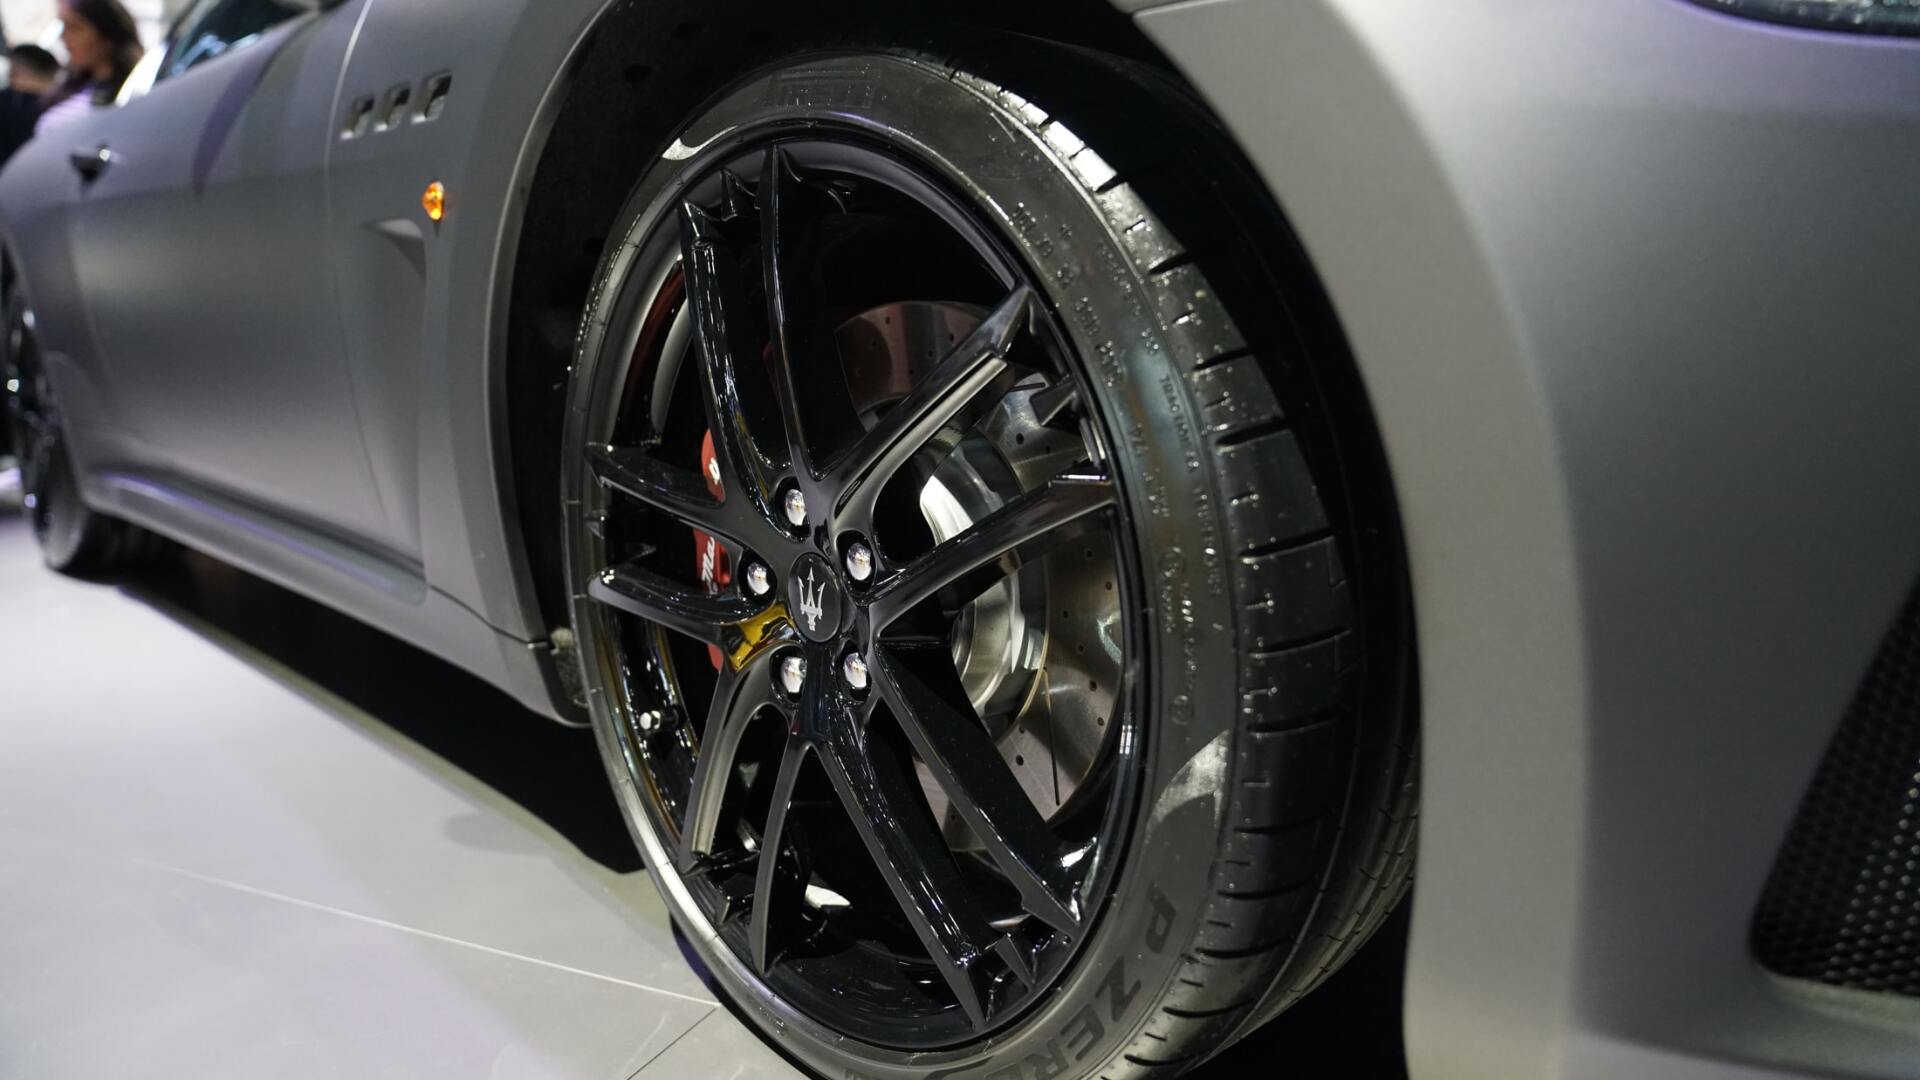 Maserati rim close up